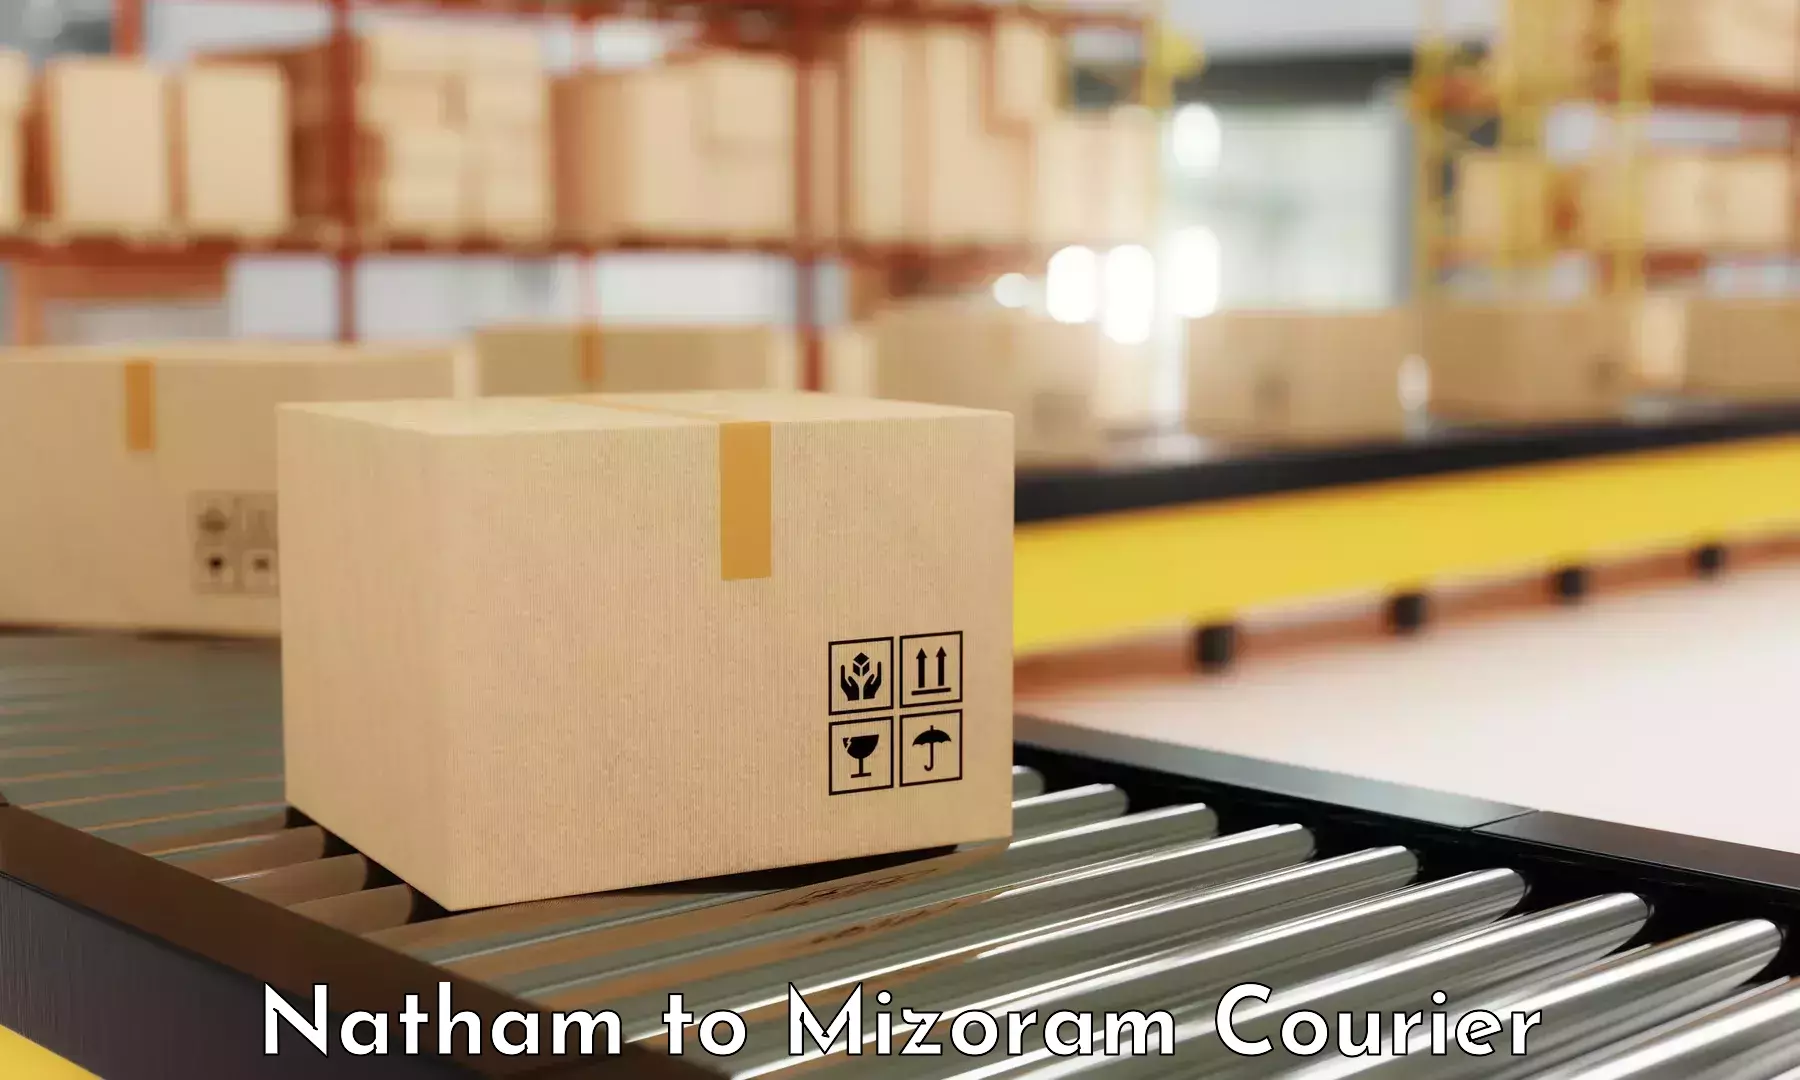 Courier service innovation Natham to Mizoram